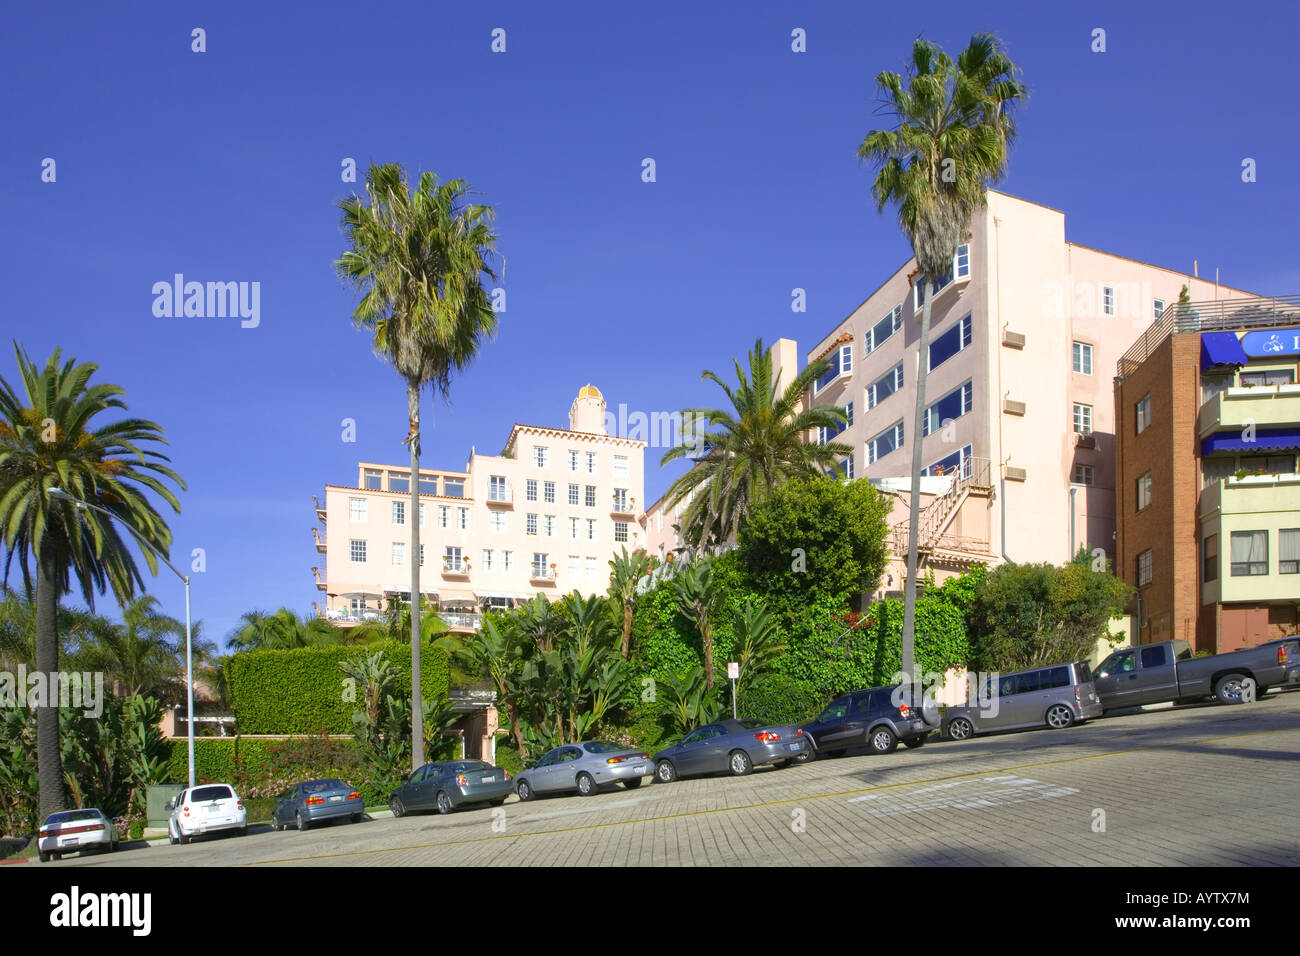 Street scene, avenue, street, towards La Jolla beach, California Stock Photo